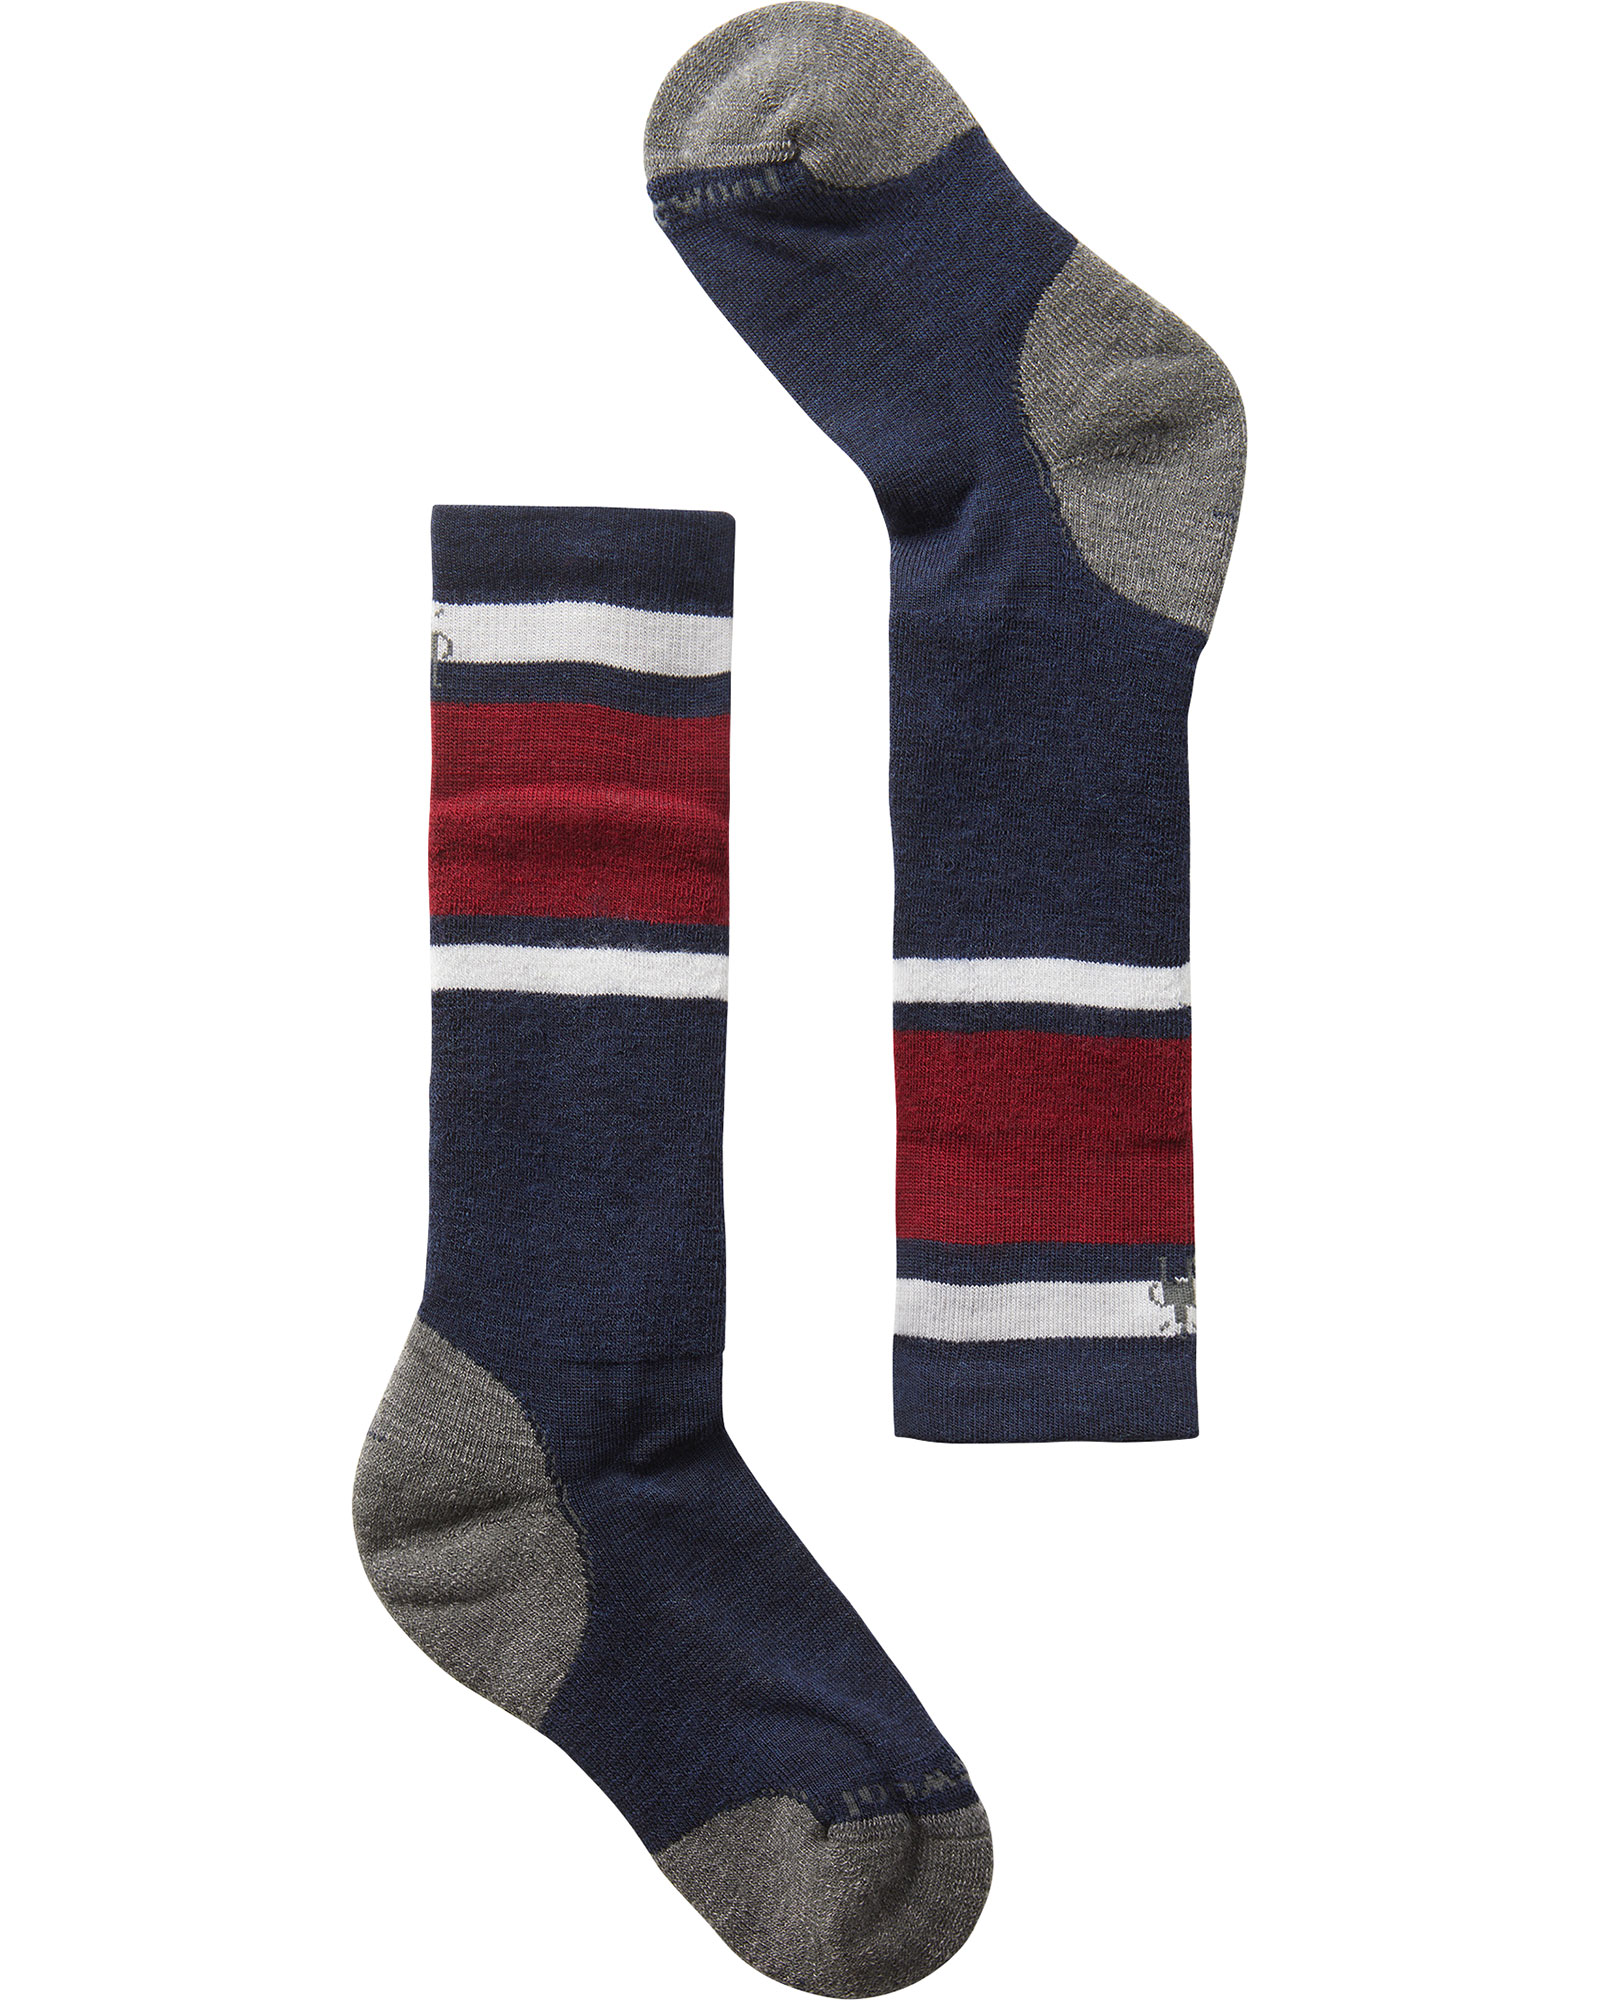 Smartwool Wintersport Full Cushion Kids’ Socks - Deep Navy S